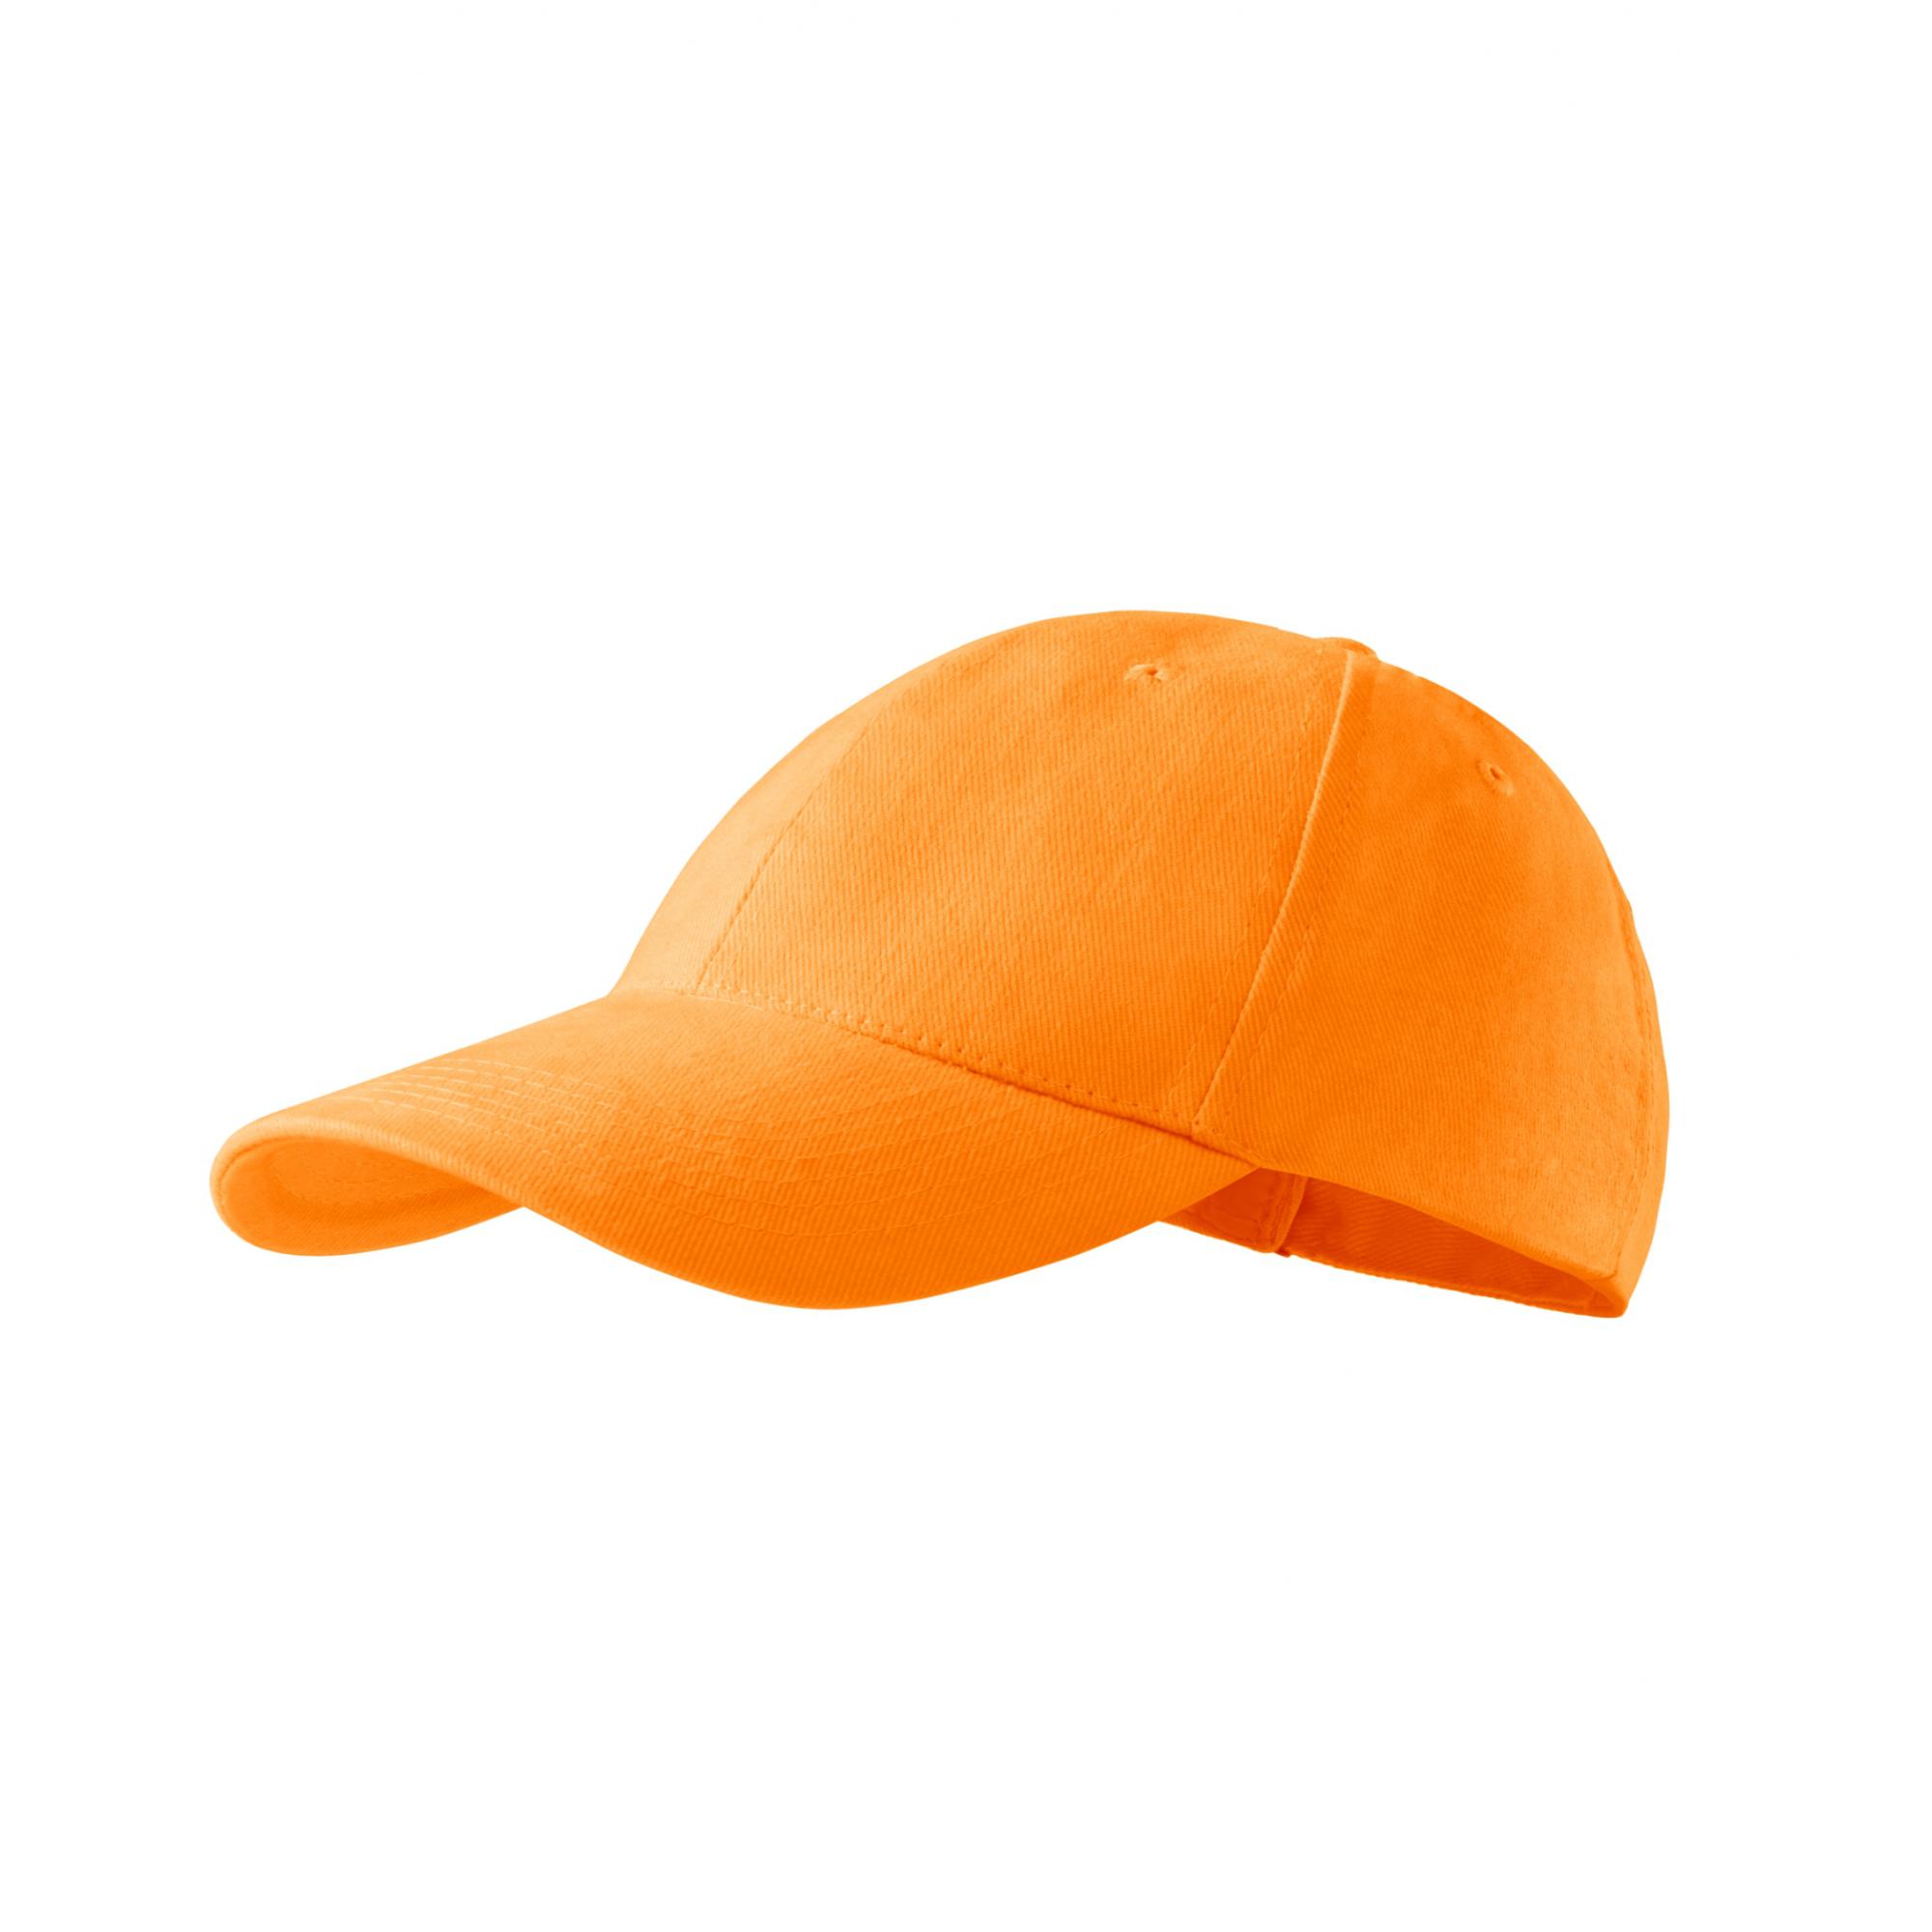 Şapcă unisex 6P 305 Tangerine orange Marime universala